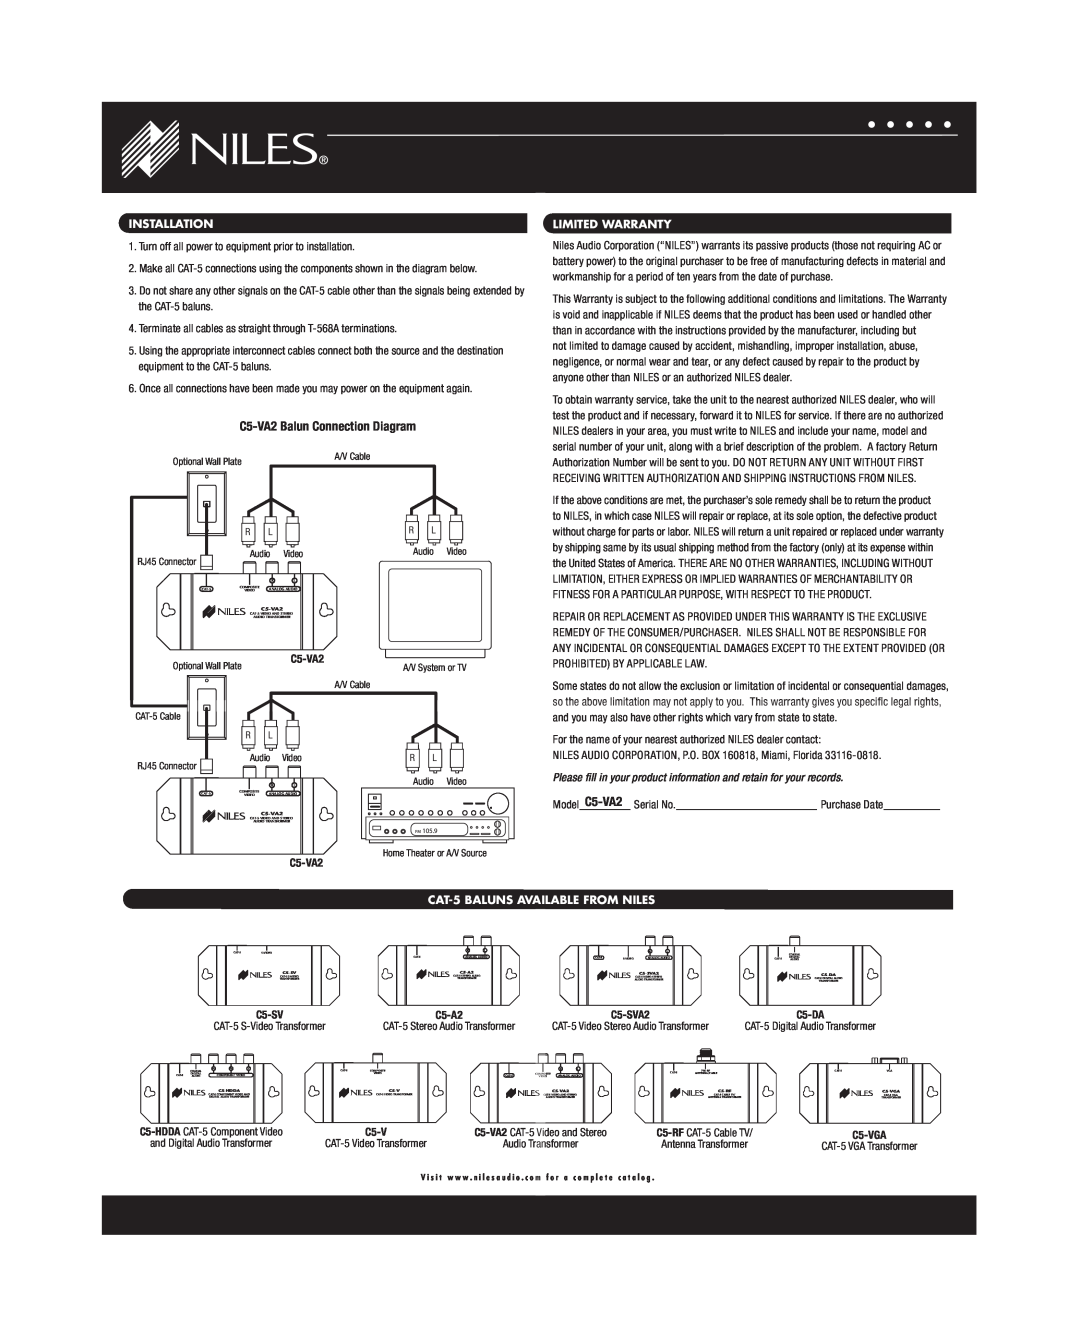 Niles Audio warranty Installation, Limited Warranty, CAT-5BALUNS AVAILABLE FROM NILES, C5-VA2Balun Connection Diagram 